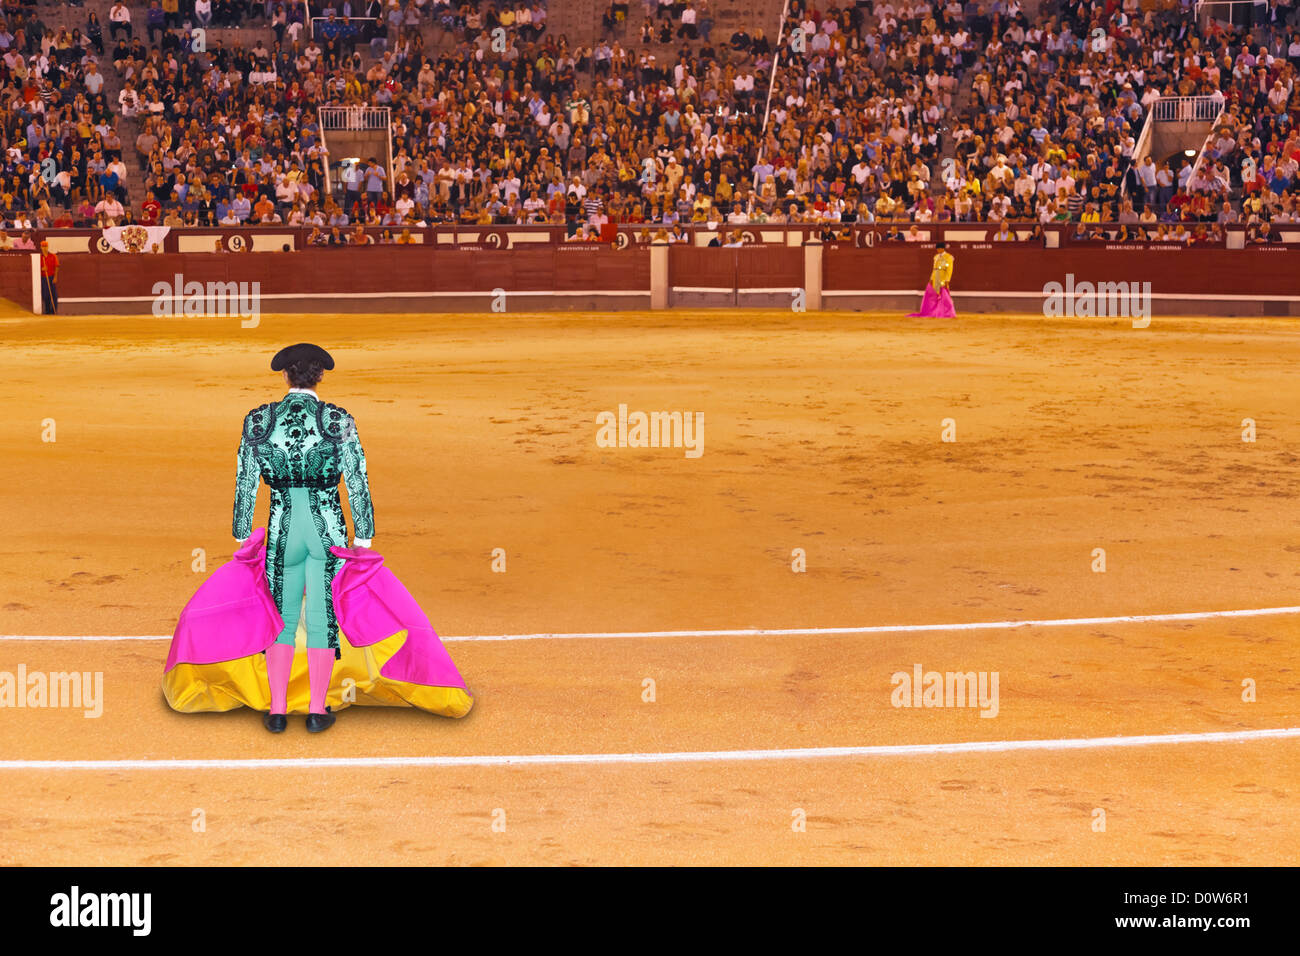 Matador in bullfighting arena at Madrid Stock Photo